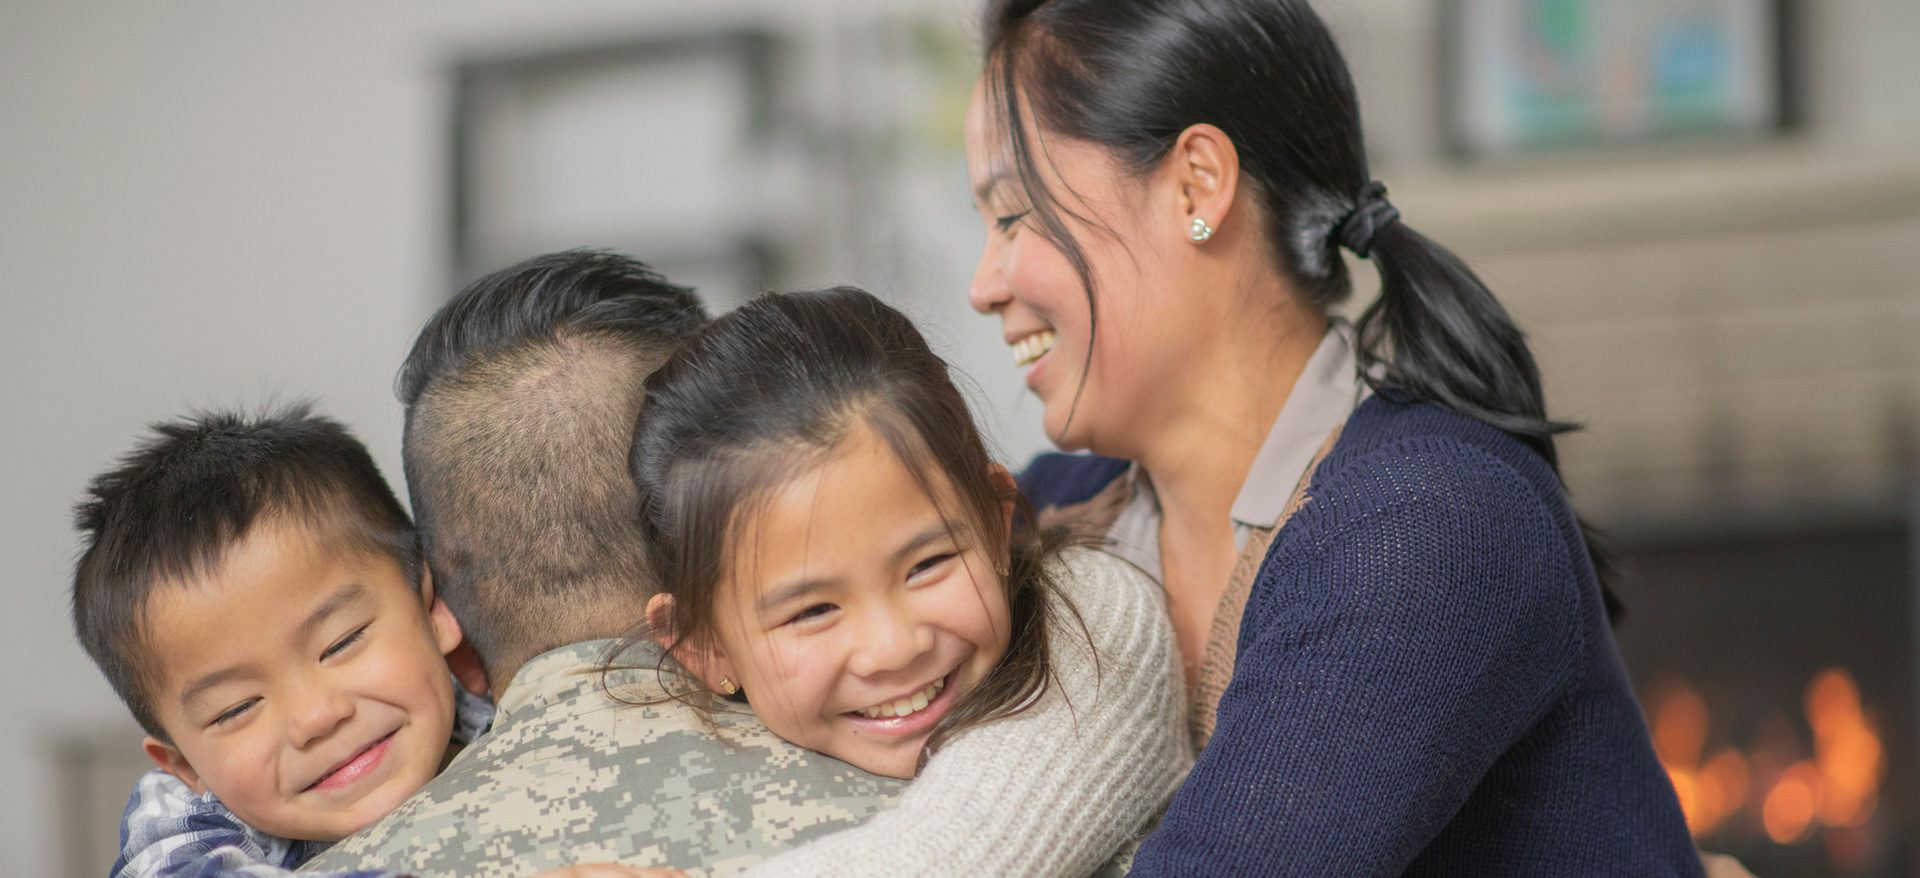 Military family hugging